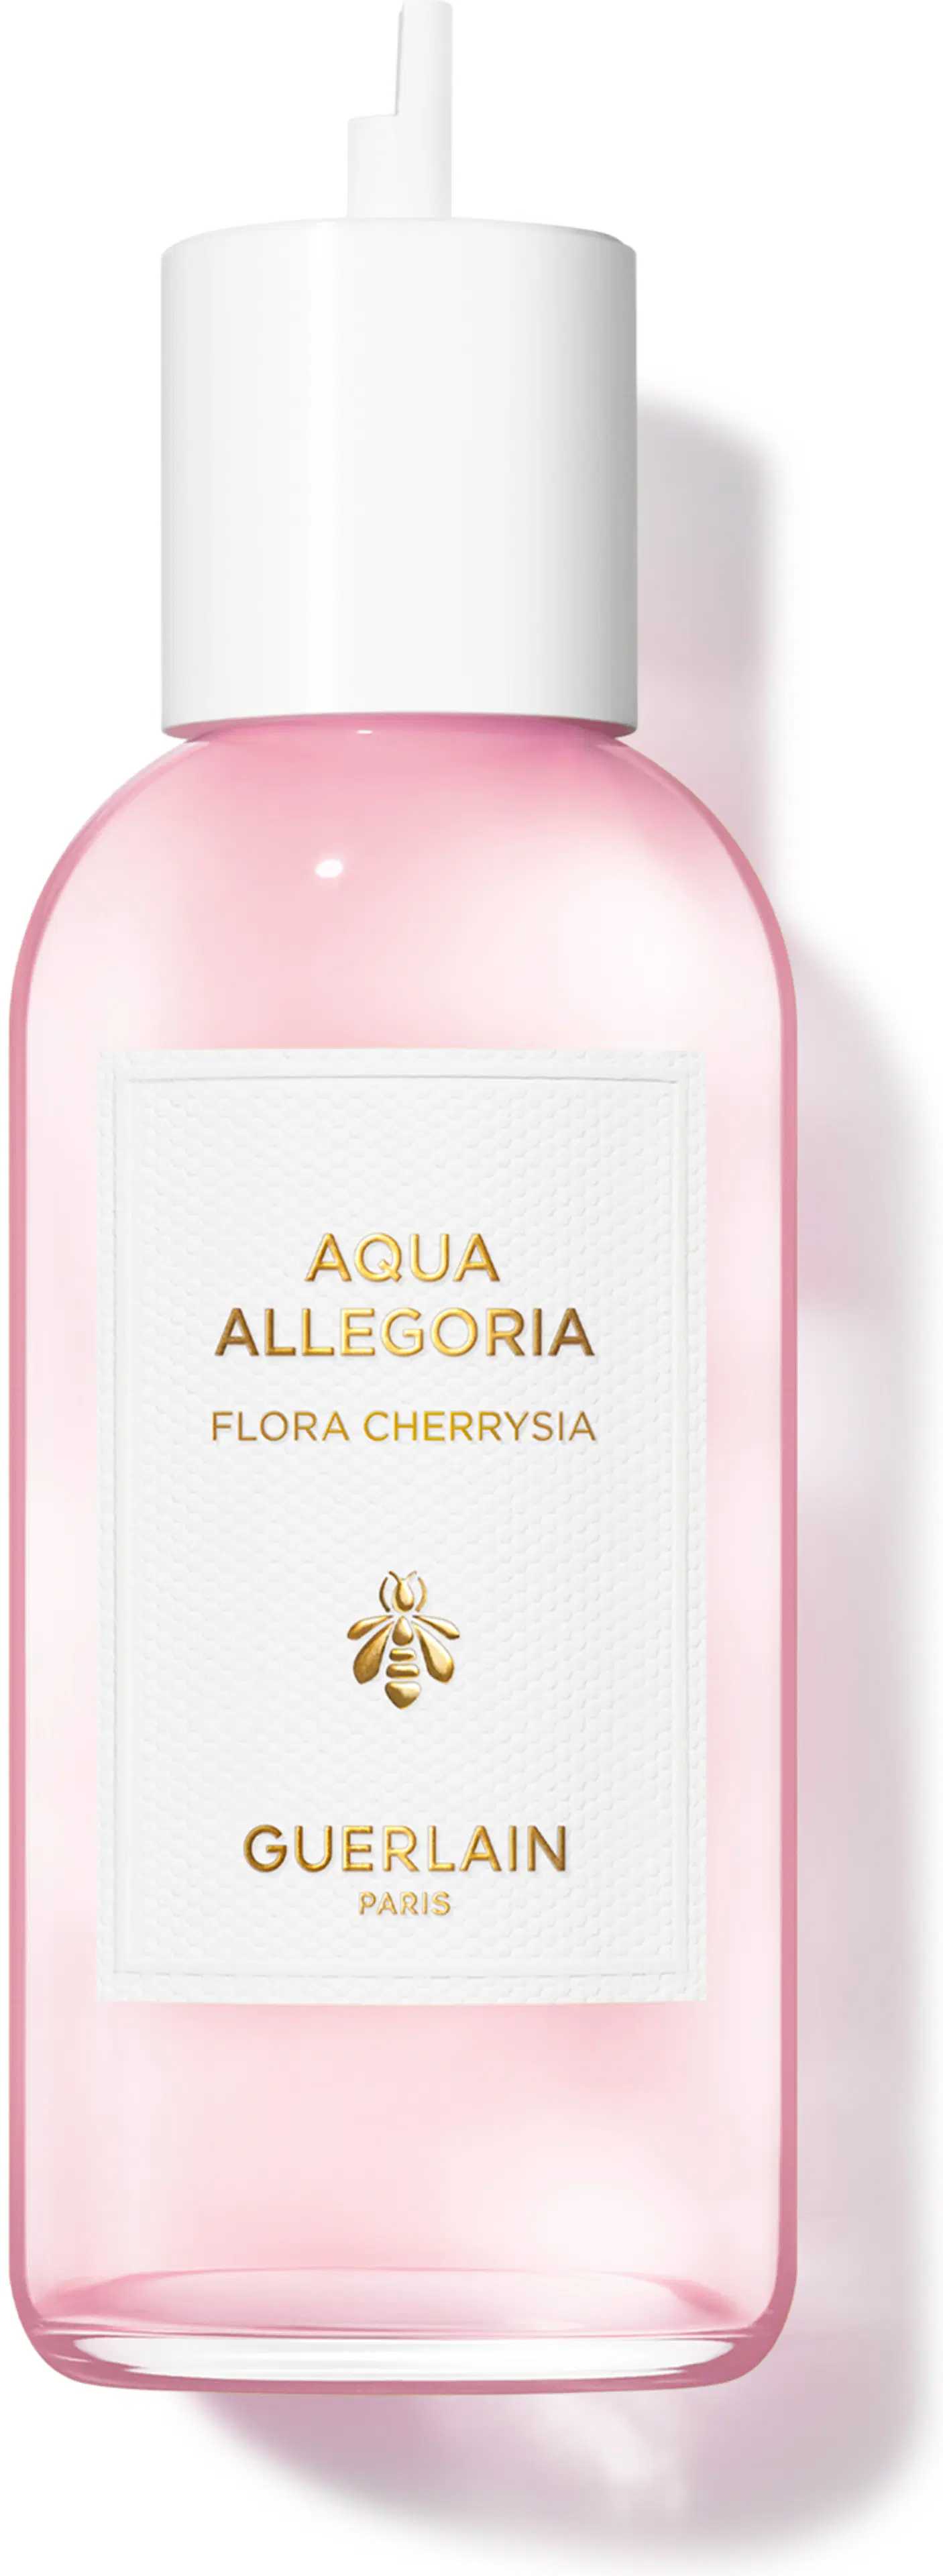 Guerlain Aqua Allegoria Flora Cherrysia EDT refill 200 ml